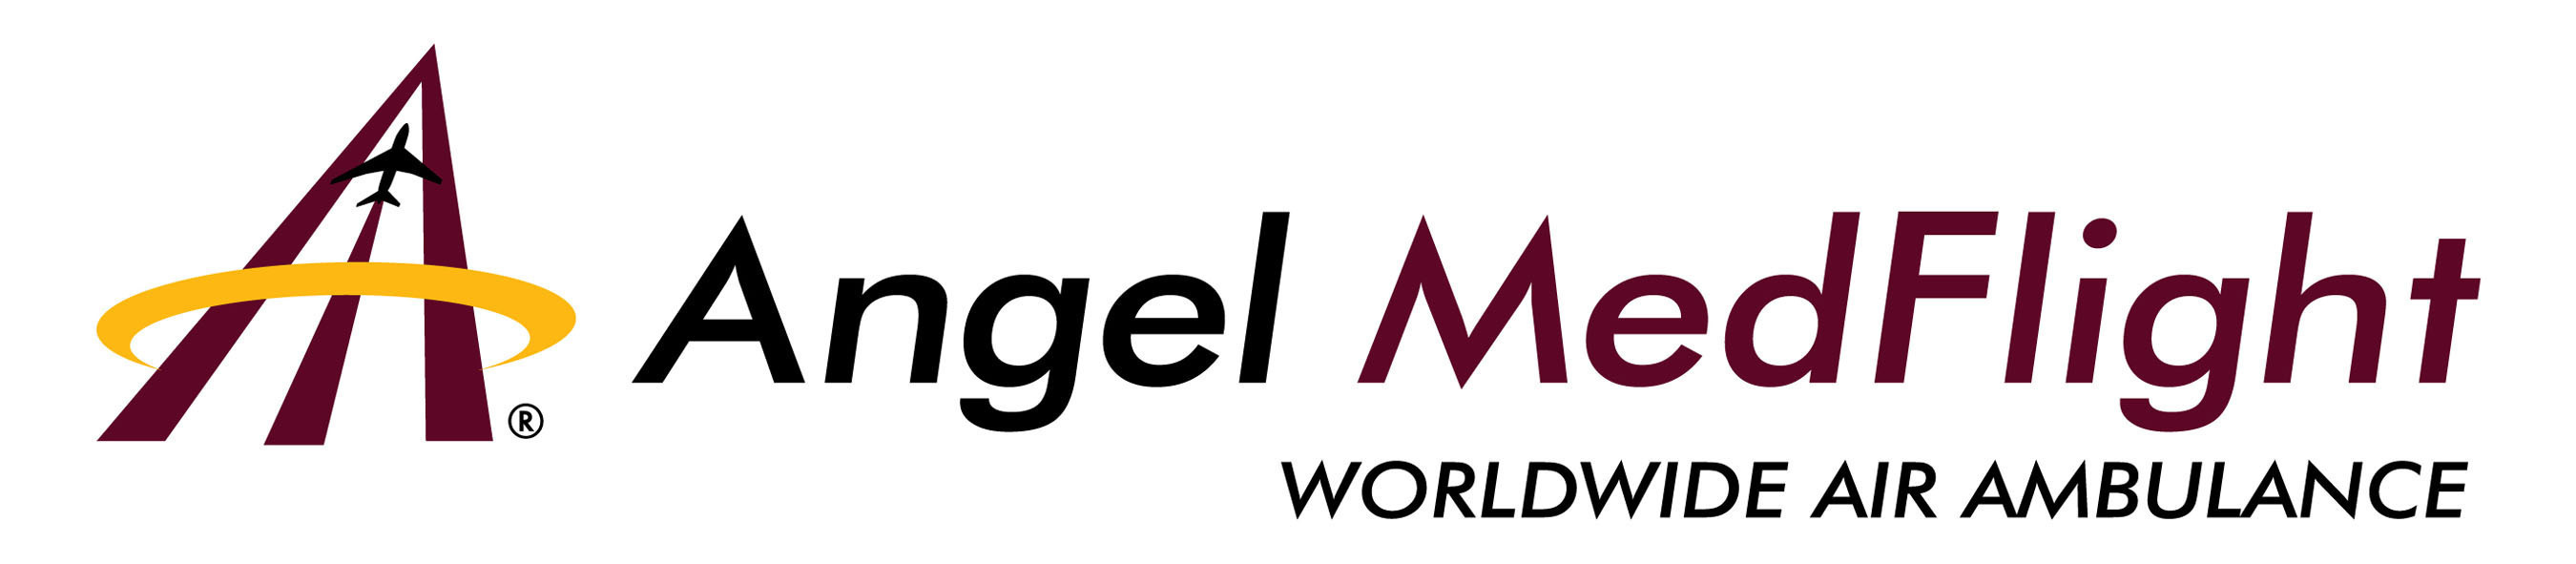 Angel MedFlight Worldwide Air Ambulance. (PRNewsFoto/Angel MedFlight Worldwide) (PRNewsFoto/ANGEL MEDFLIGHT WORLDWIDE)